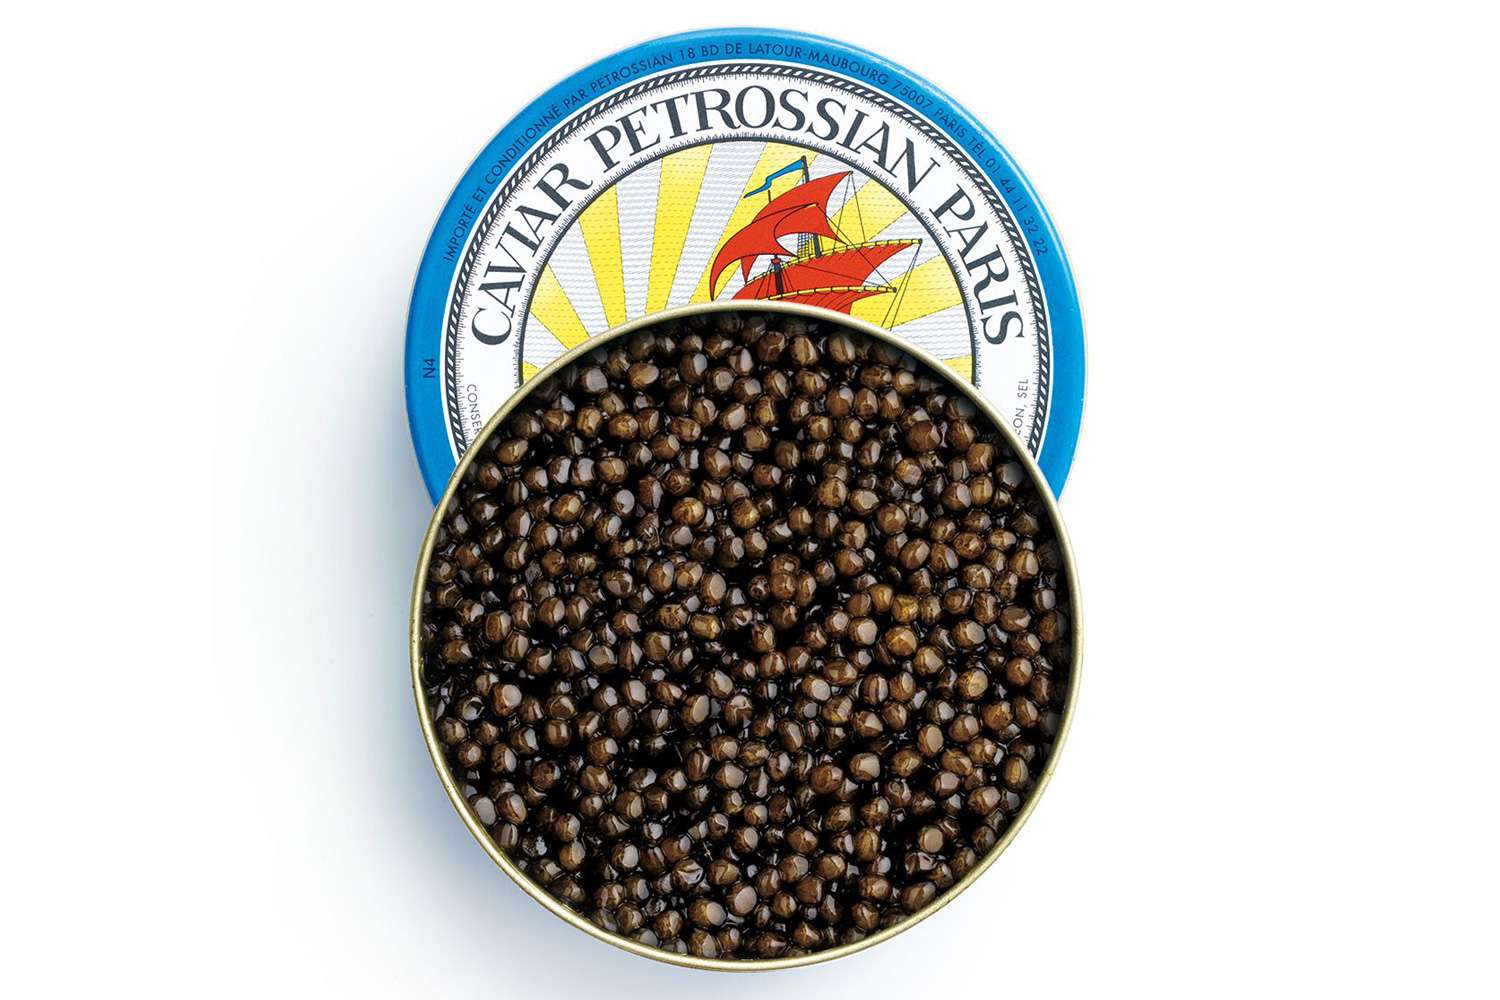 Caviar Royal Ossetra Petrossian